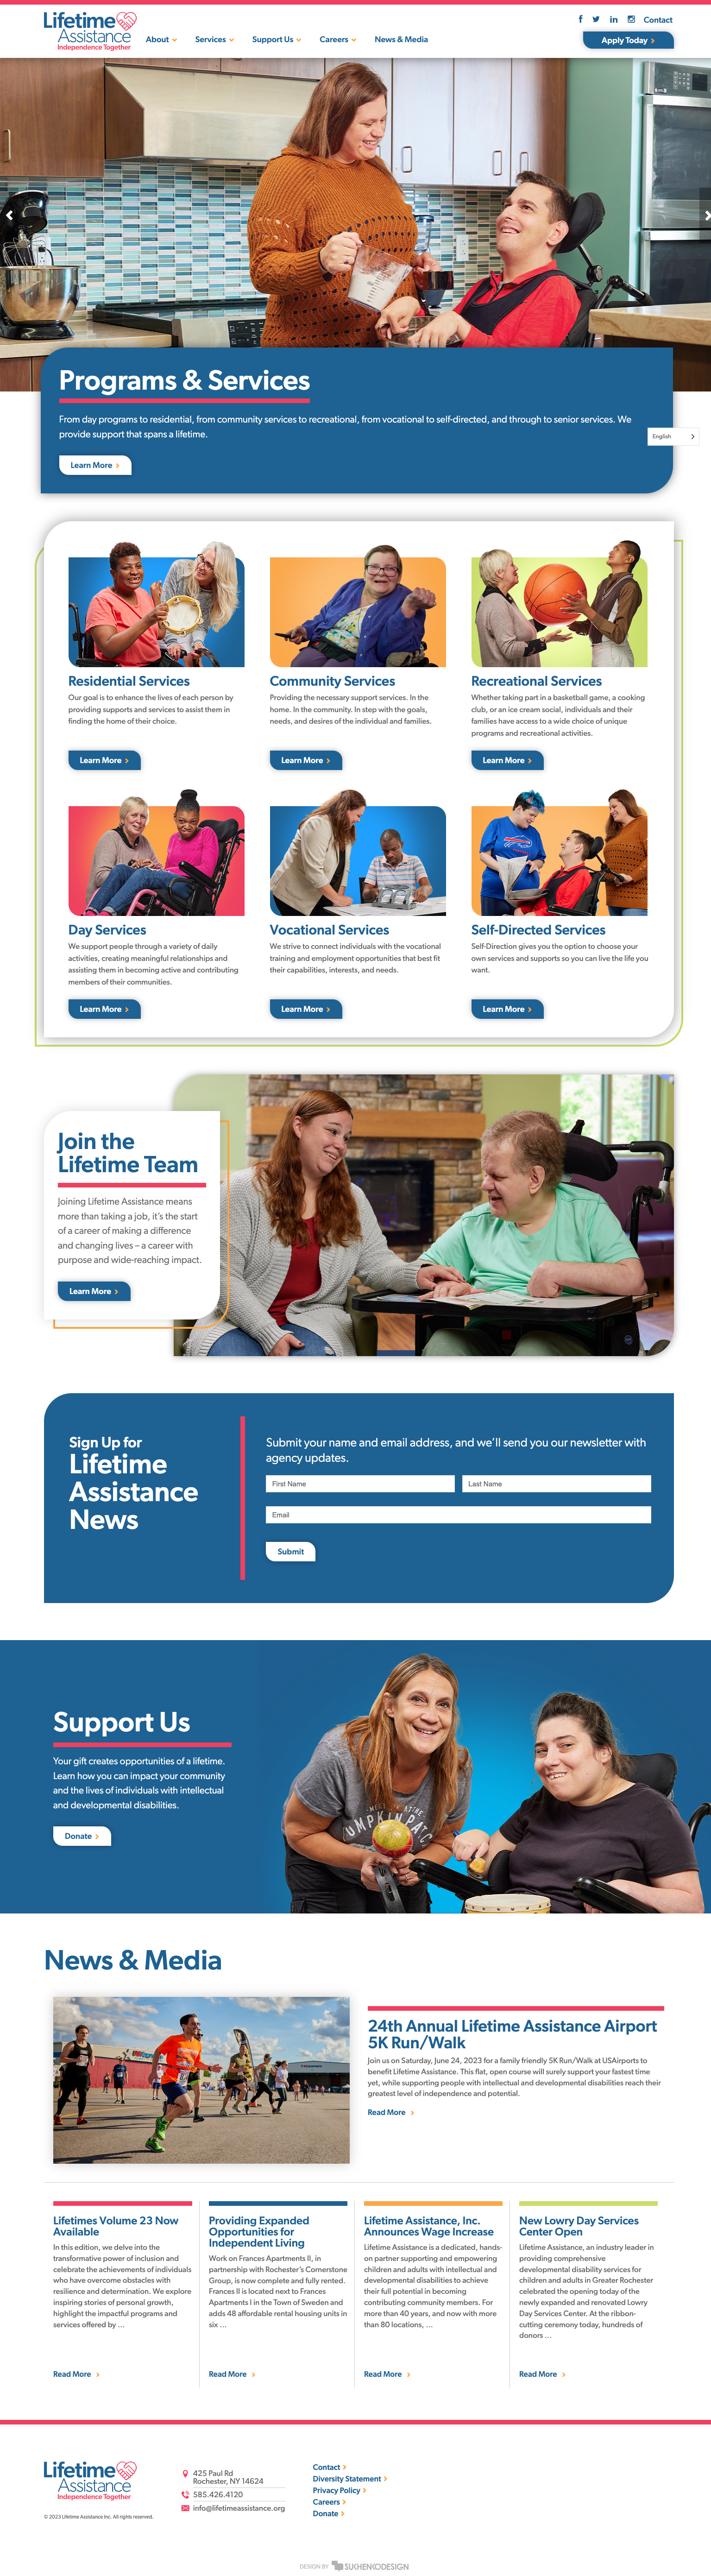 Lifetime Assistance home page